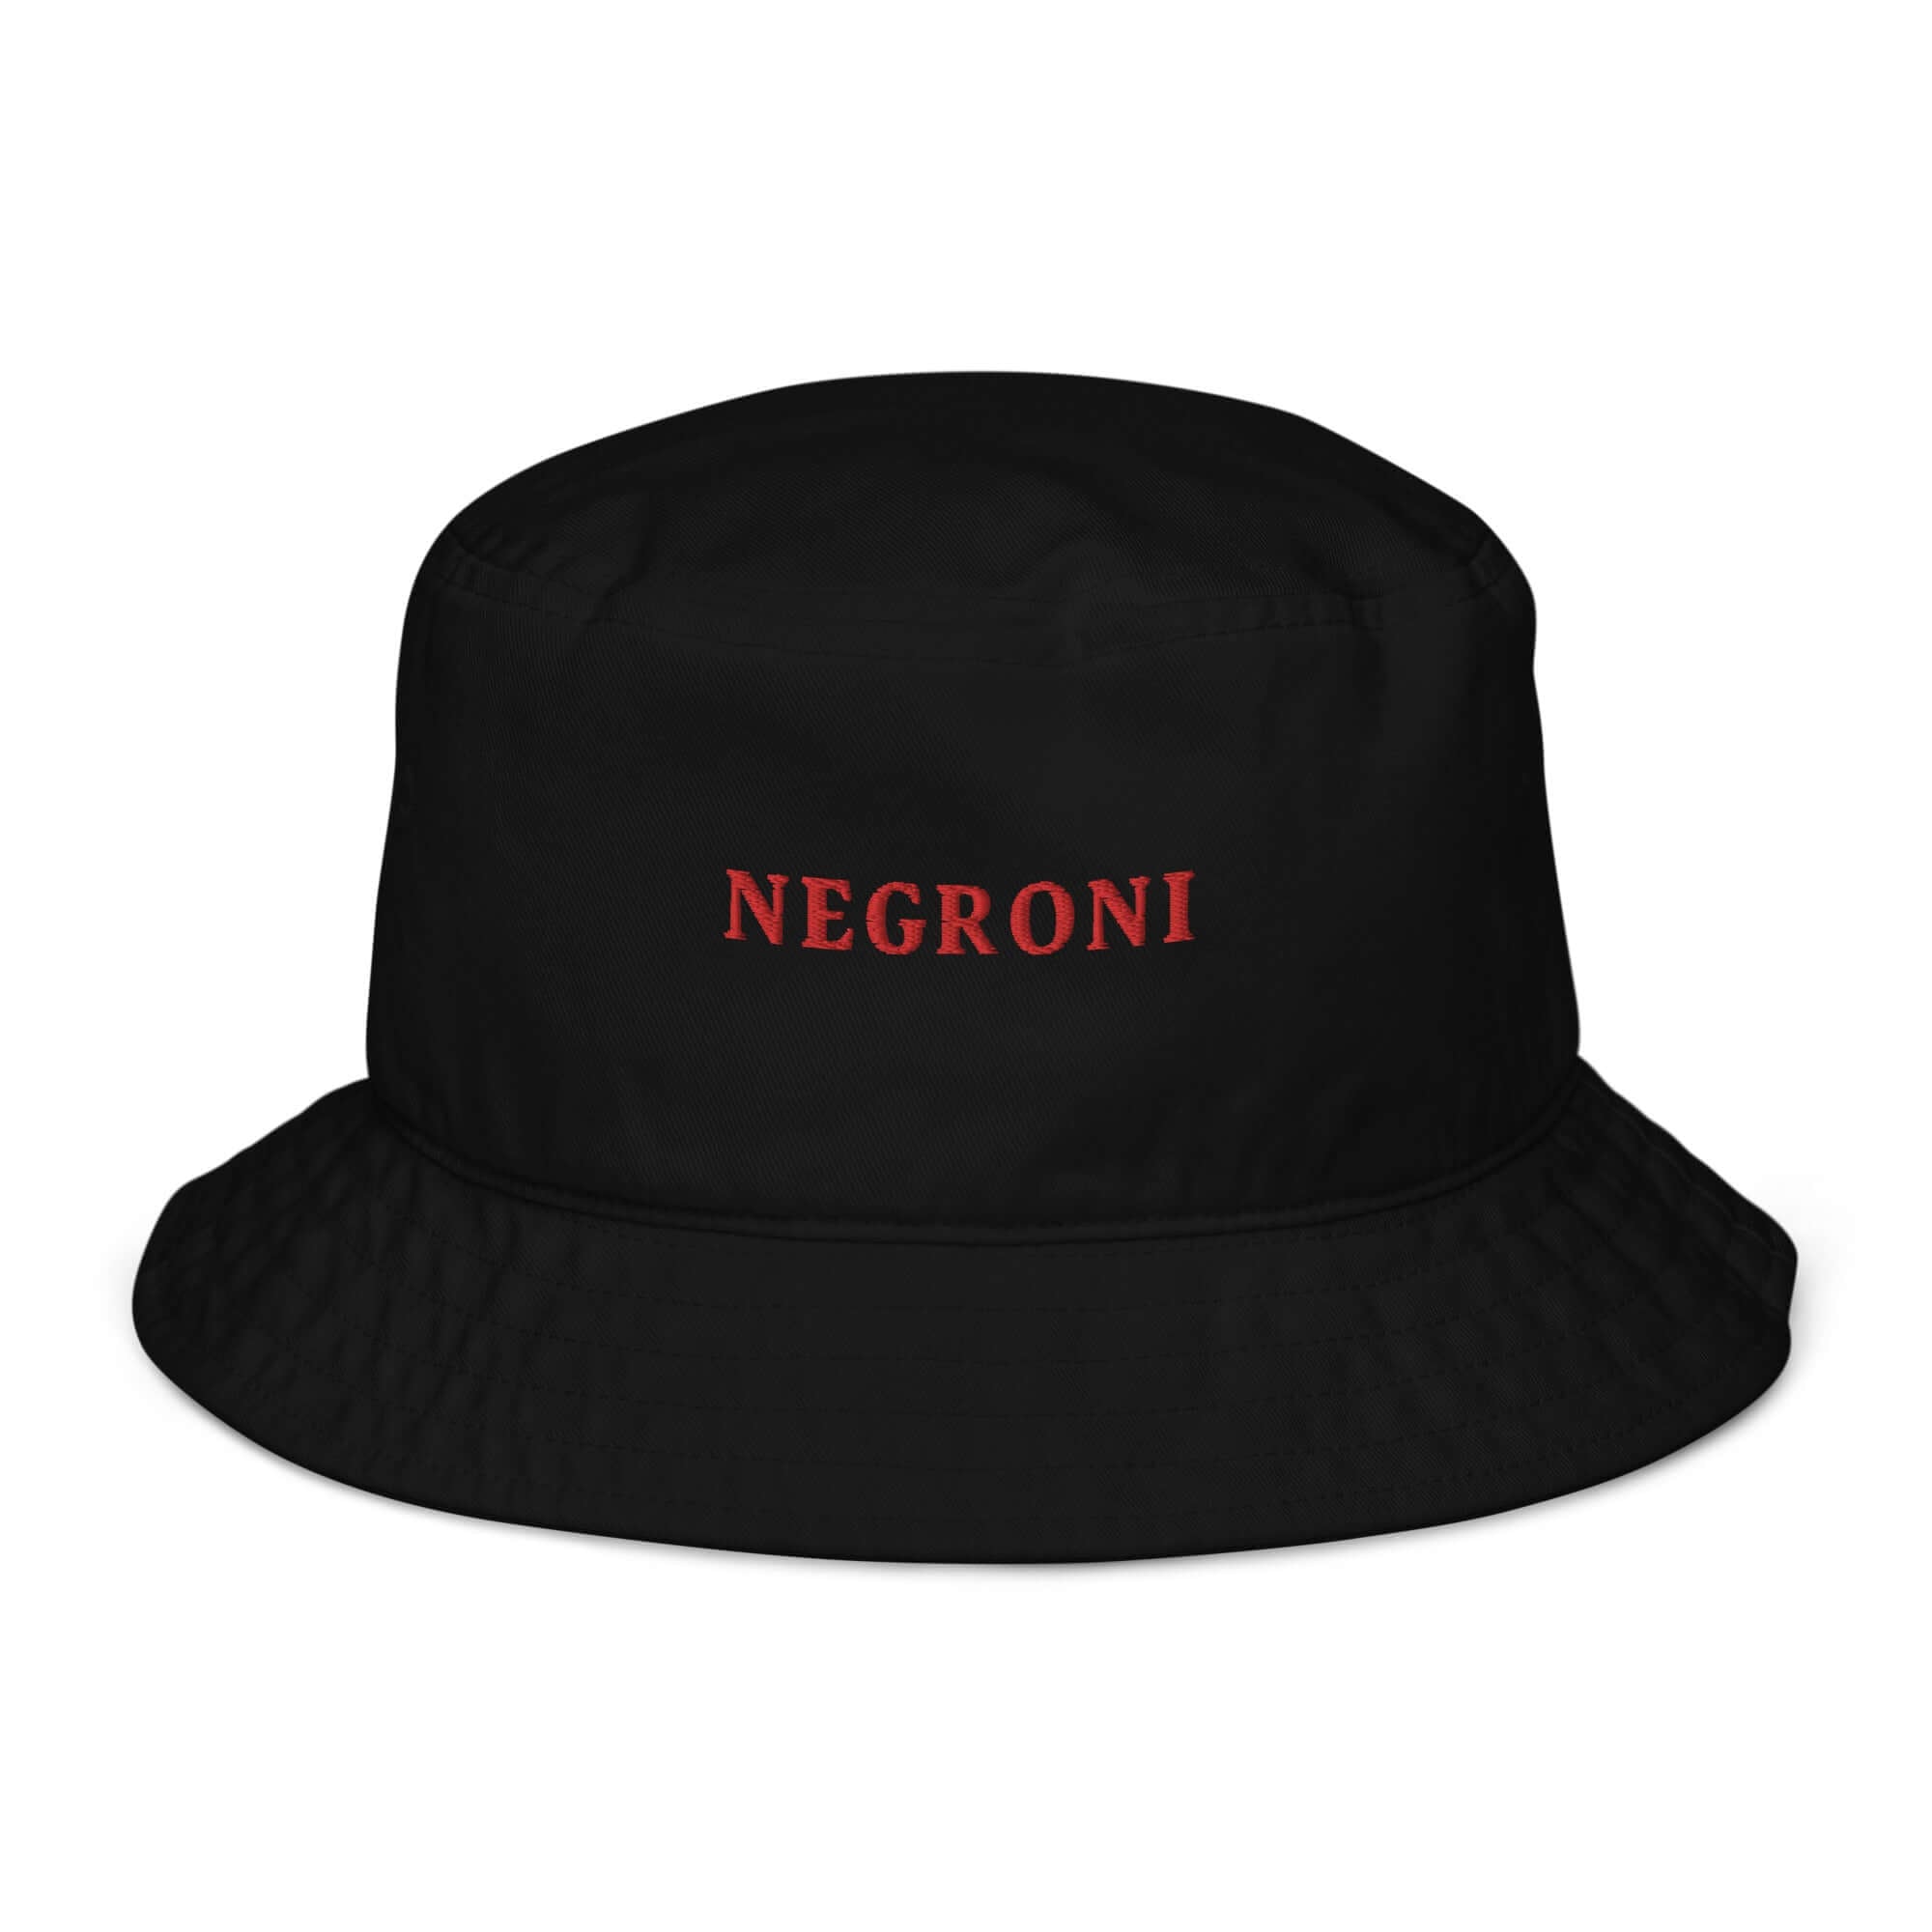 Negroni Bucket Hat - The Refined Spirit